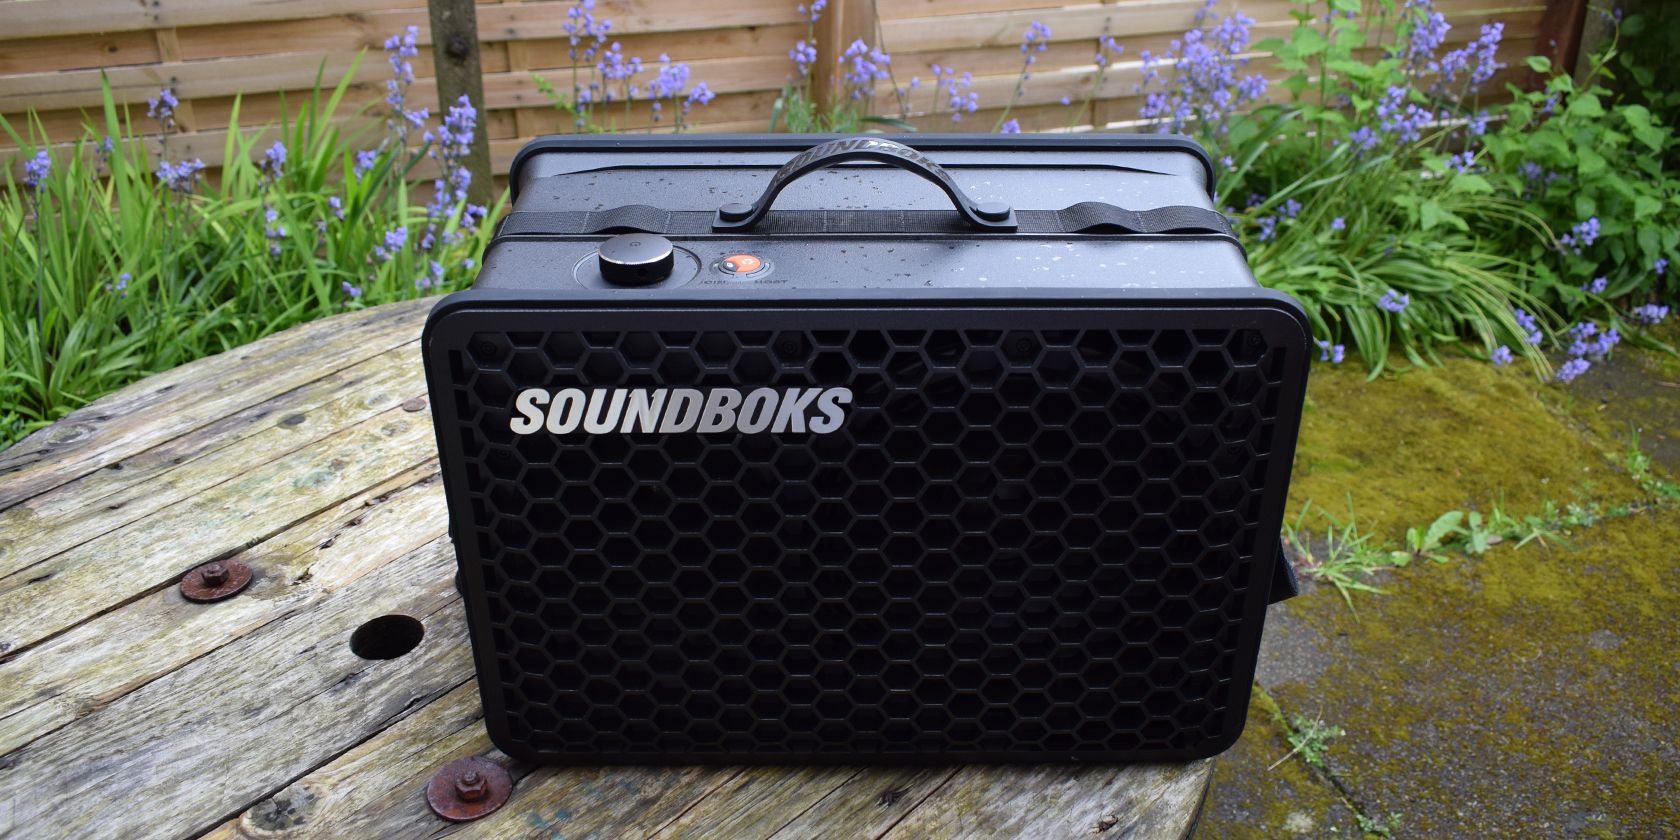 Soundboks Go outdoors on table